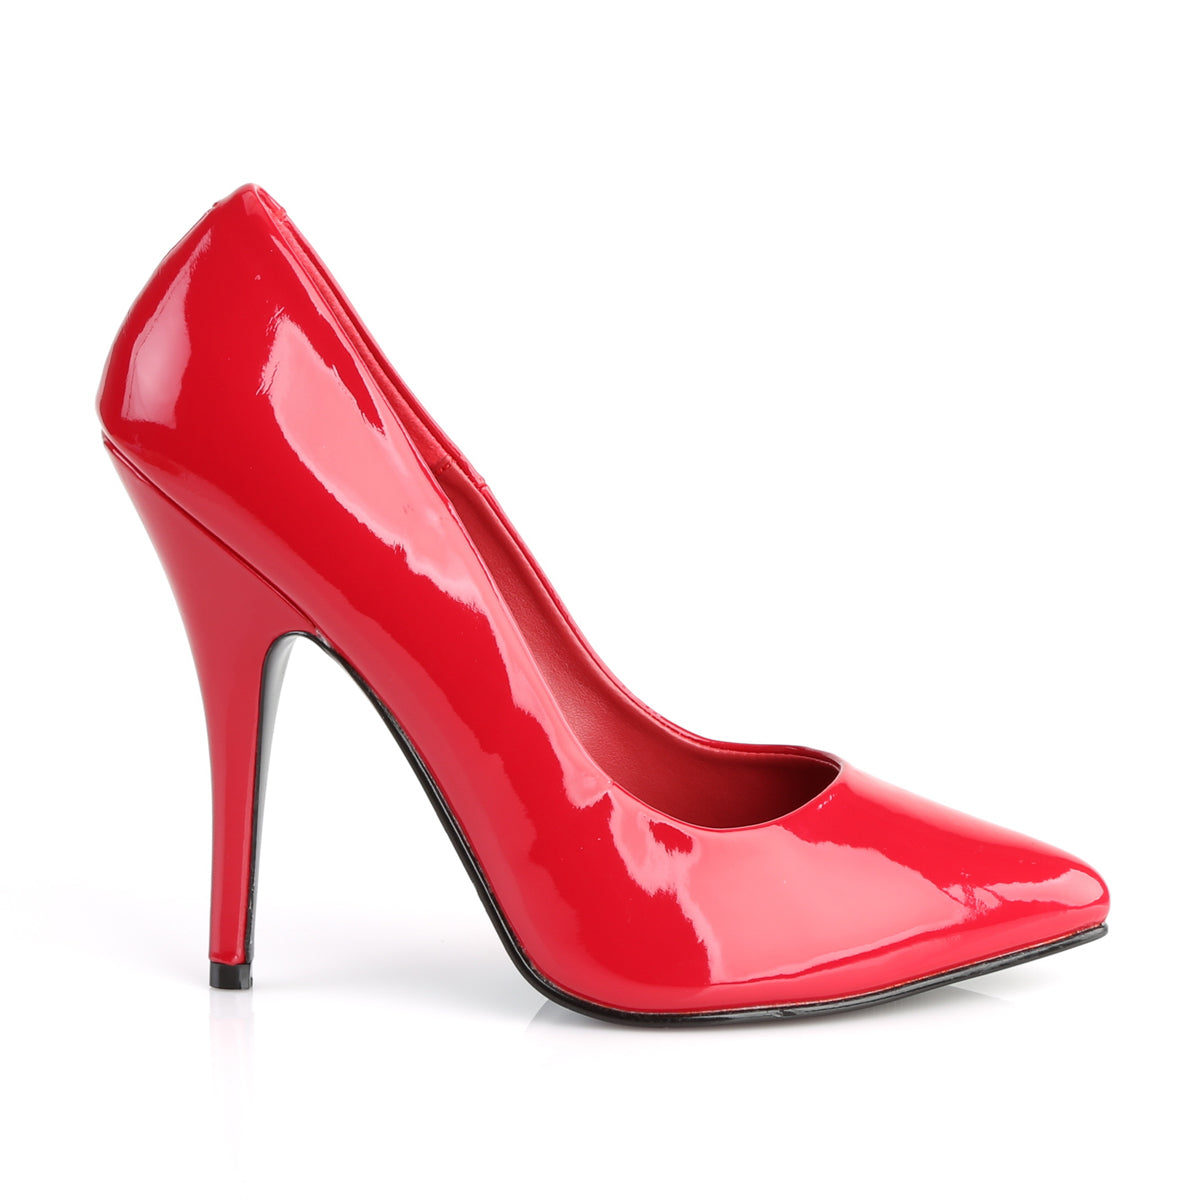 SEDUCE-420 Pleaser Sexy Shoe 5 Inch Heel Red Fetish Footwear-Pleaser- Sexy Shoes Fetish Heels